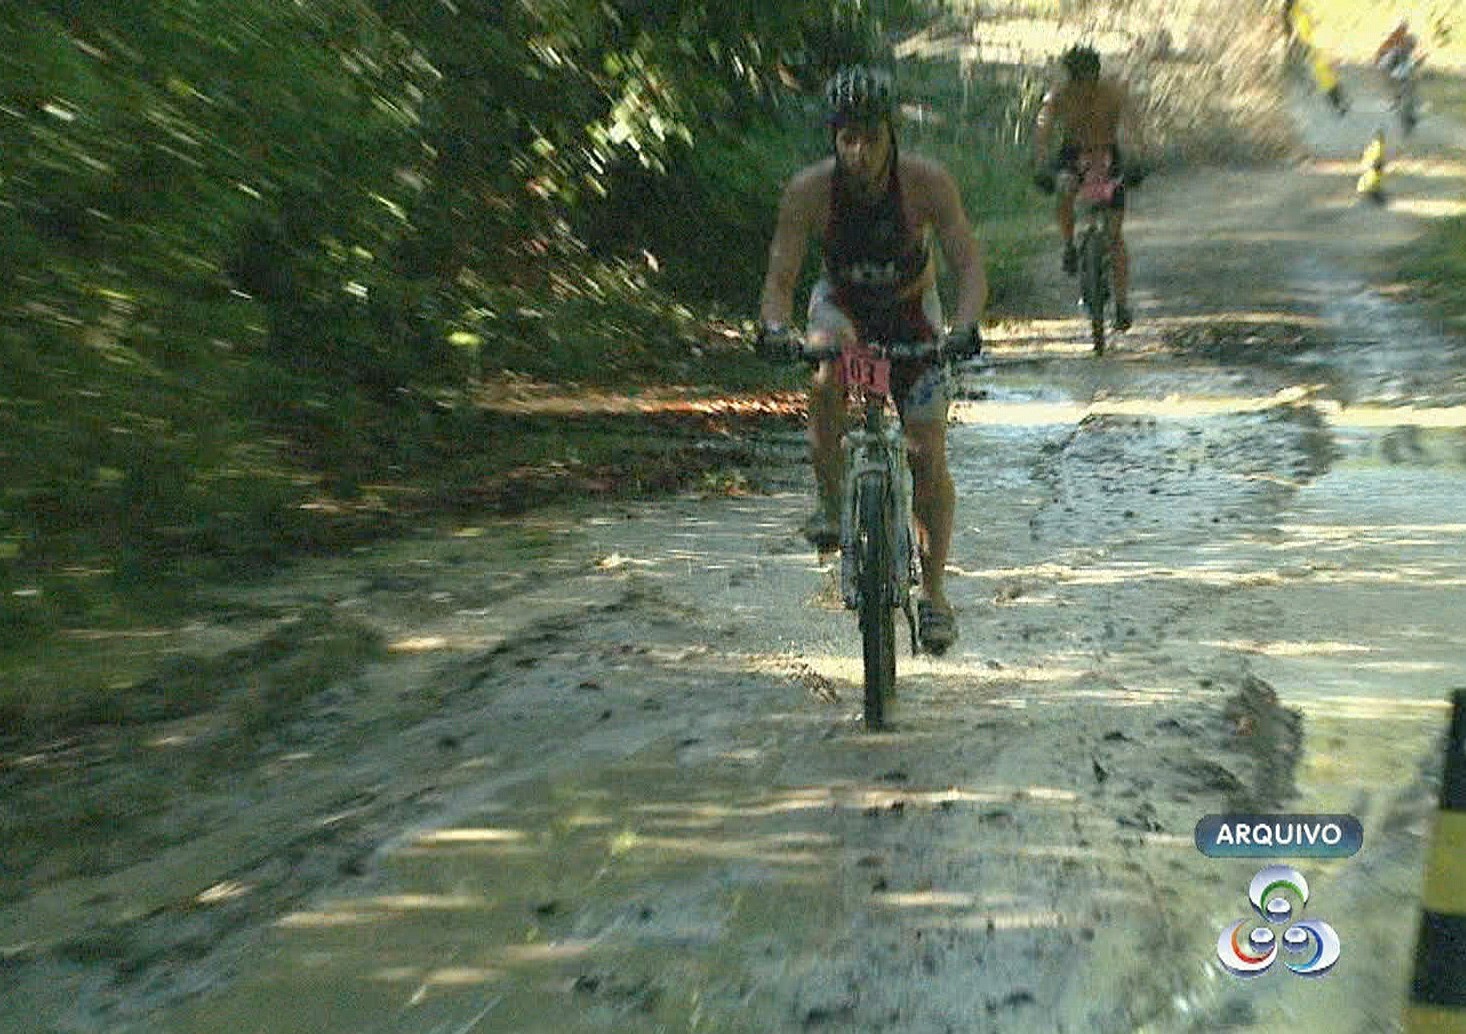 Prova profissional inclui natação, moutain bike e corrida (Foto: Jornal do Amazonas)